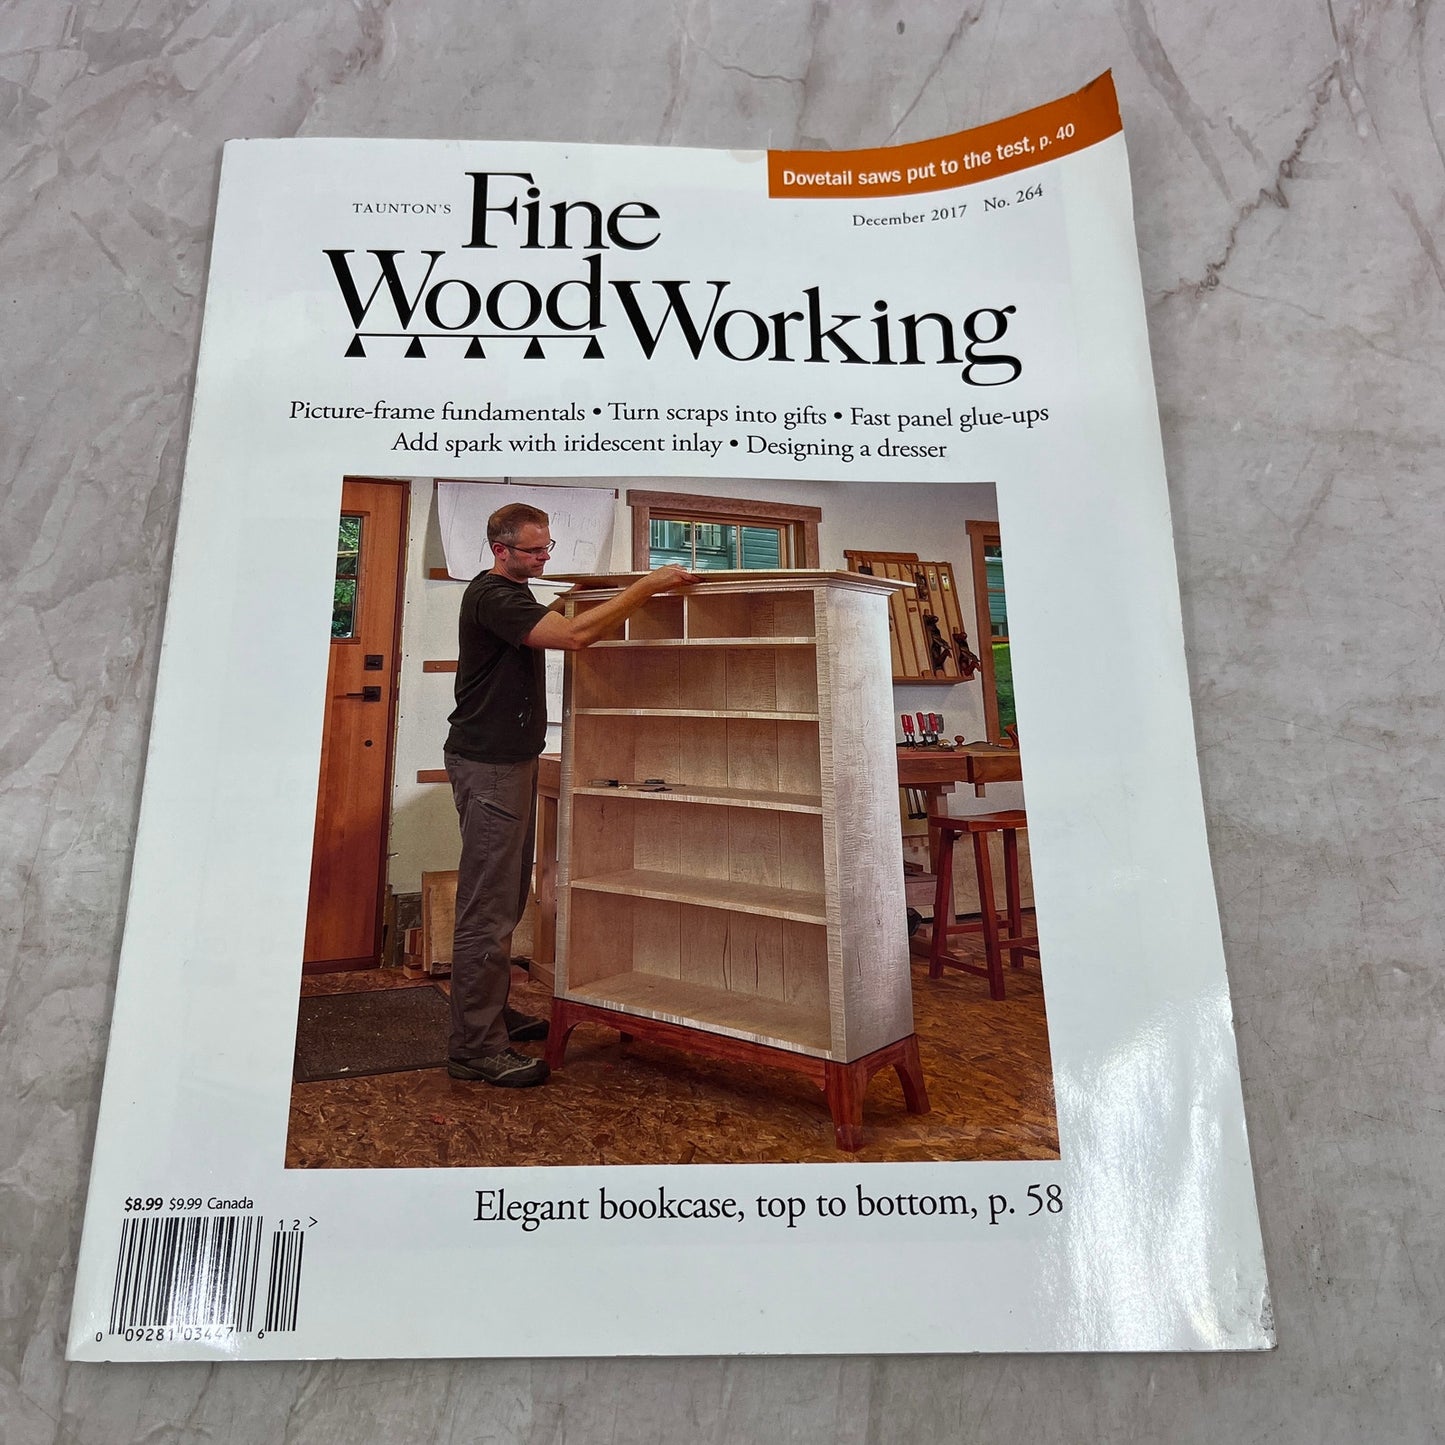 Elegant Bookcase - Dec 2017 No 264 - Taunton's Fine Woodworking Magazine M36